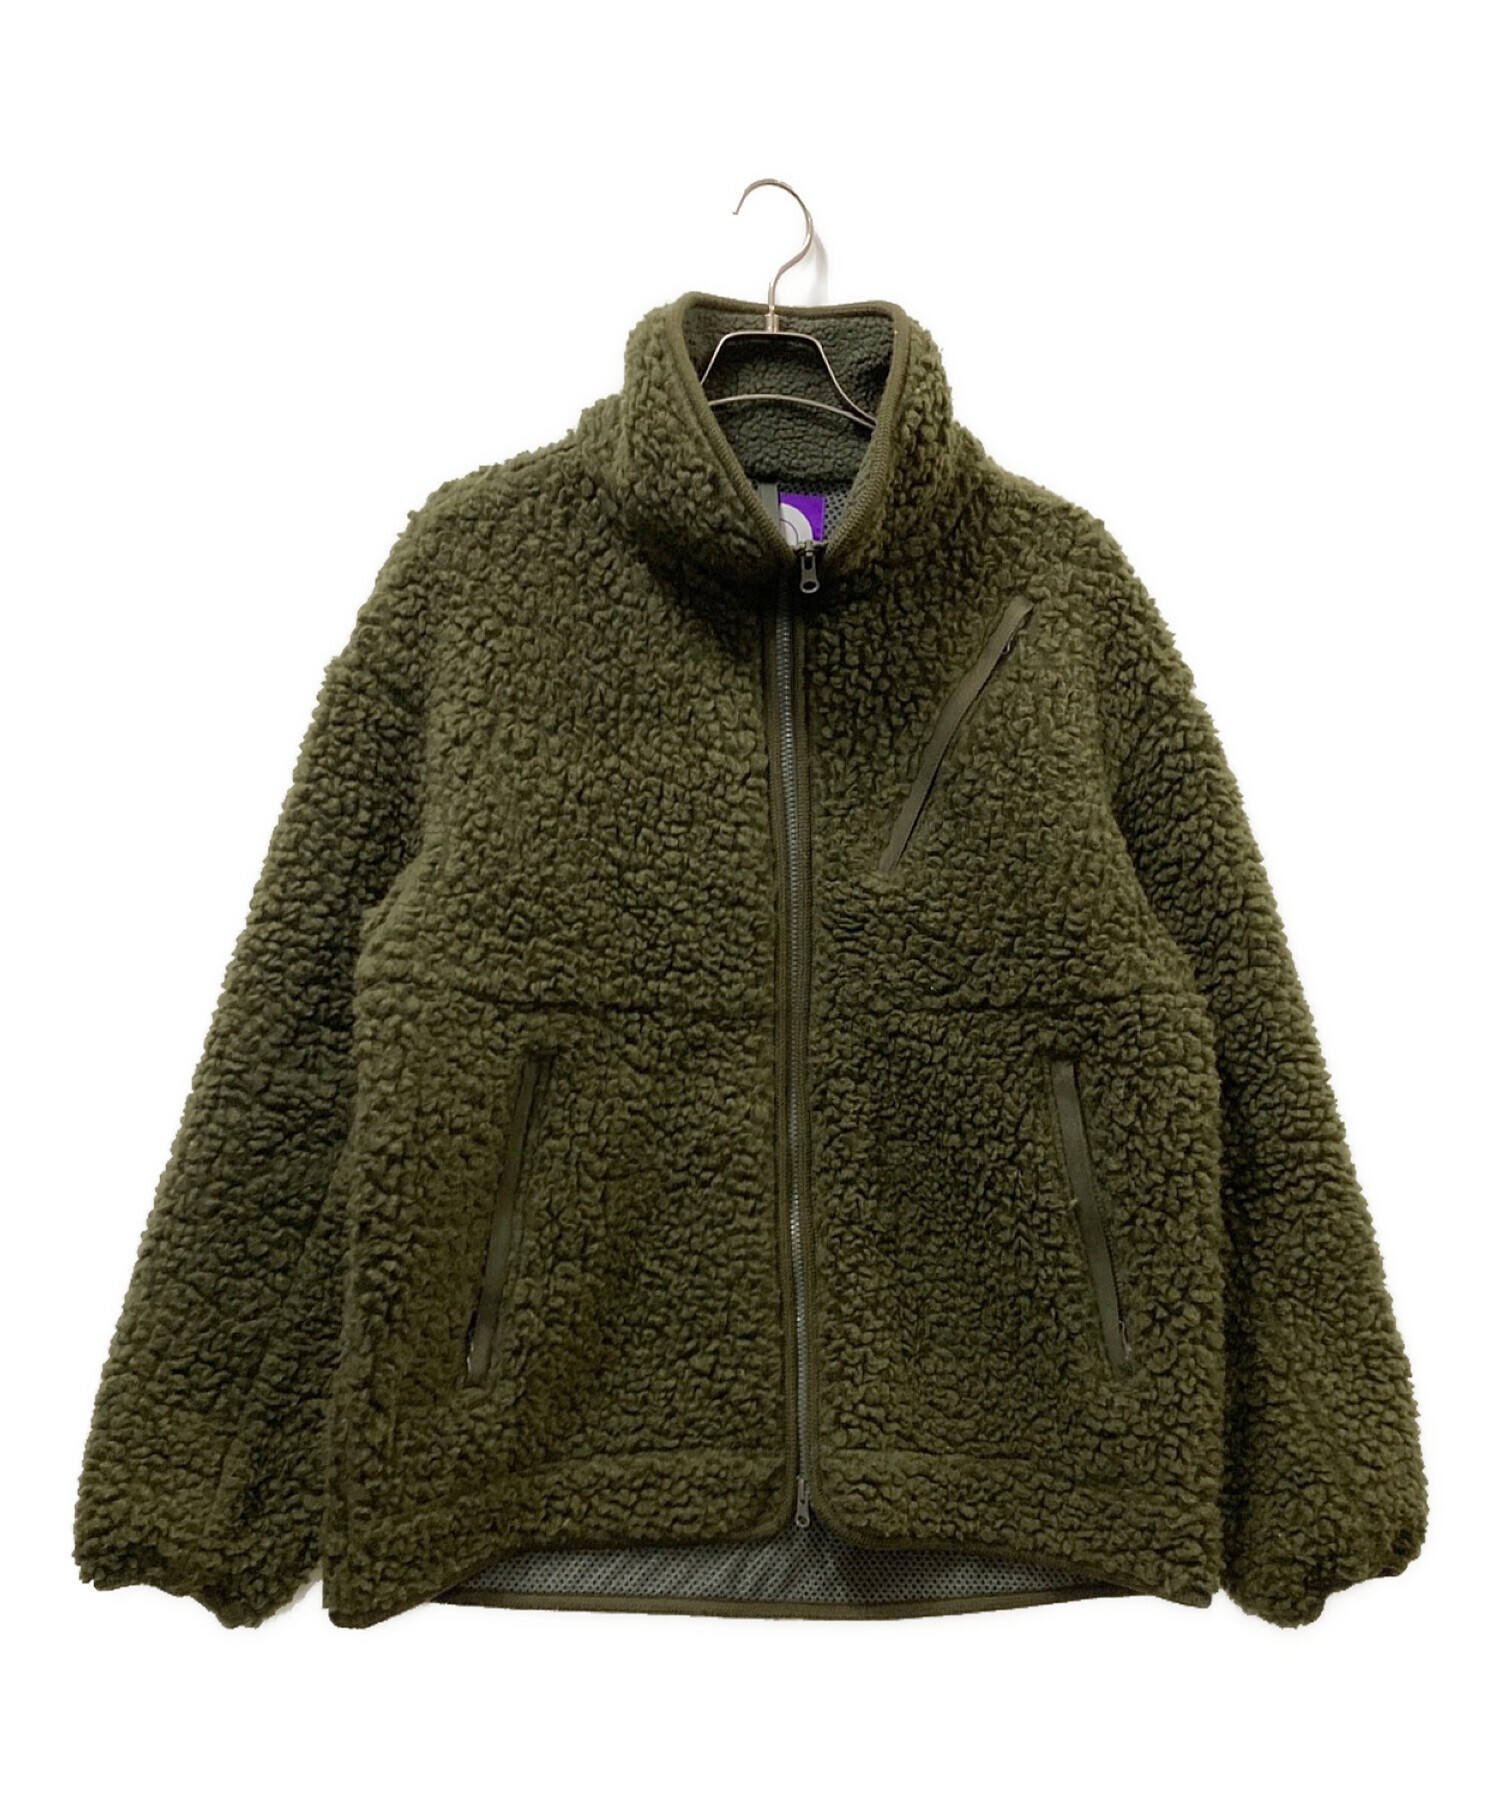 THE NORTHFACE PURPLELABEL (ザ ノースフェイス パープルレーベル) Wool Boa Fleece Field Jacket  and Long Coat カーキ サイズ:Ｍ